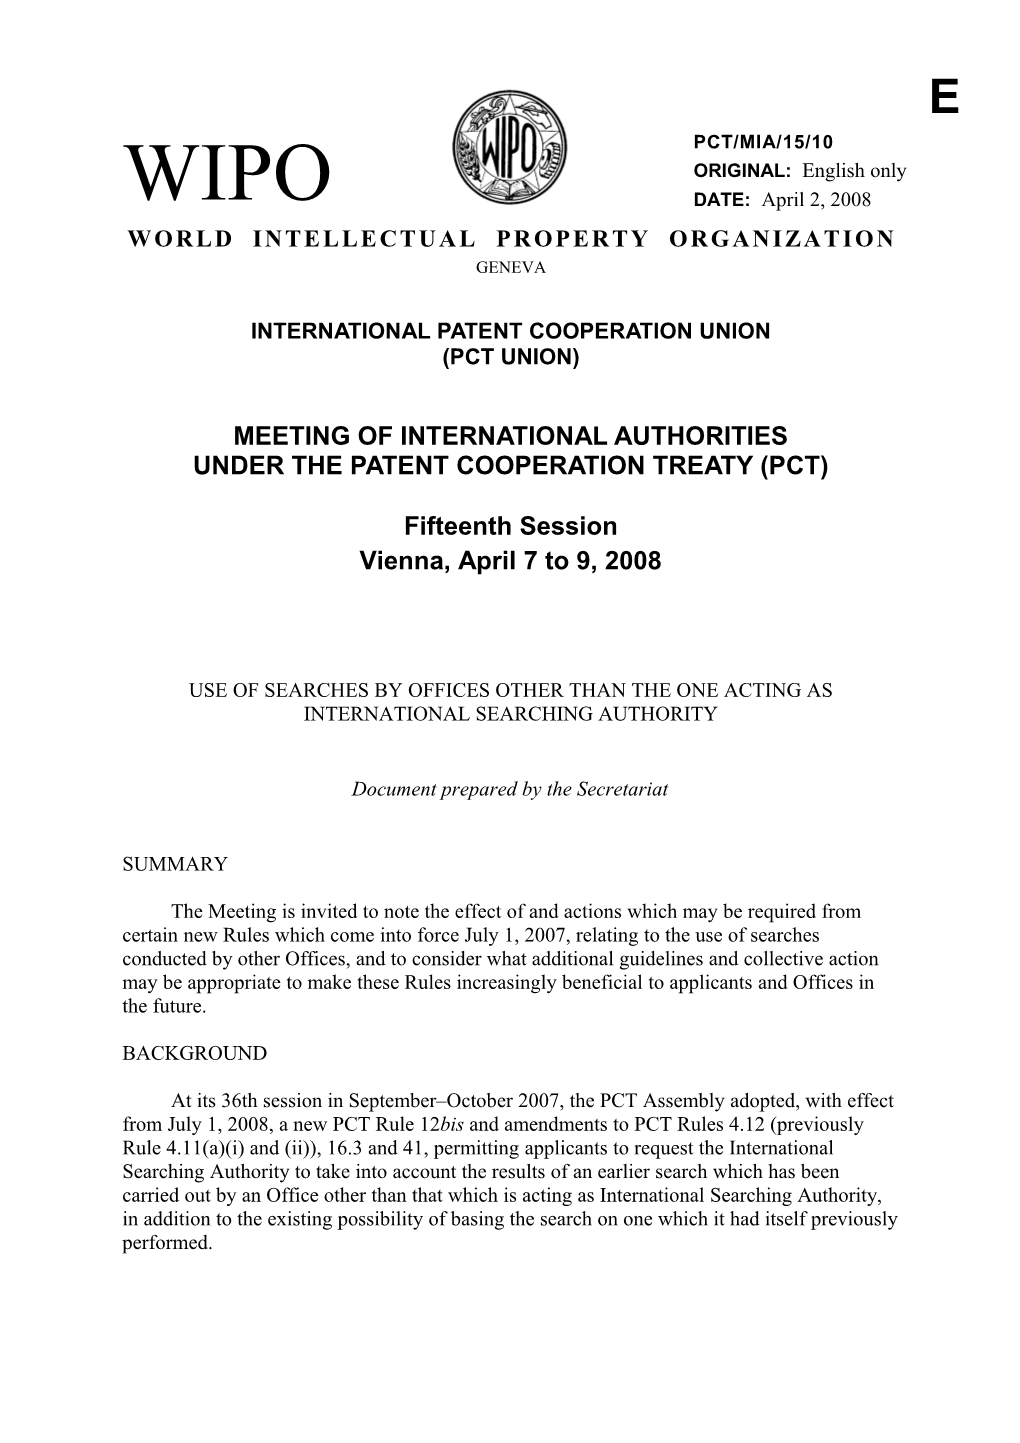 International Patent Cooperation Union (Pct Union) s7